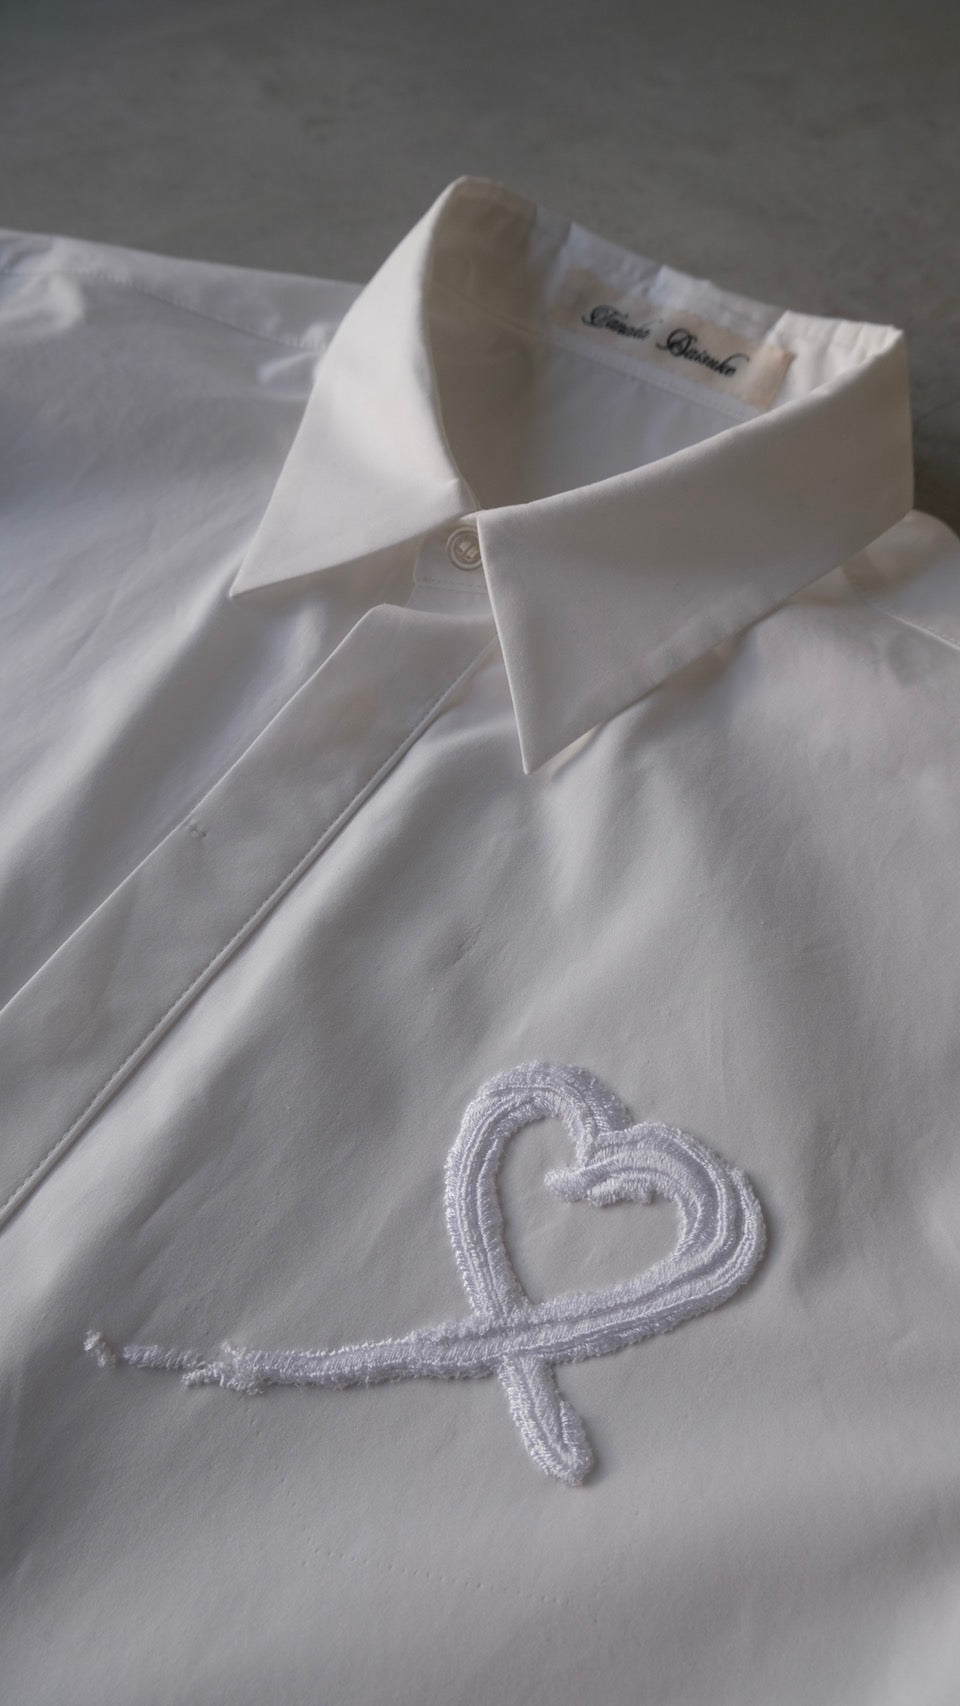 heart whipped cream Shirt【Stock】